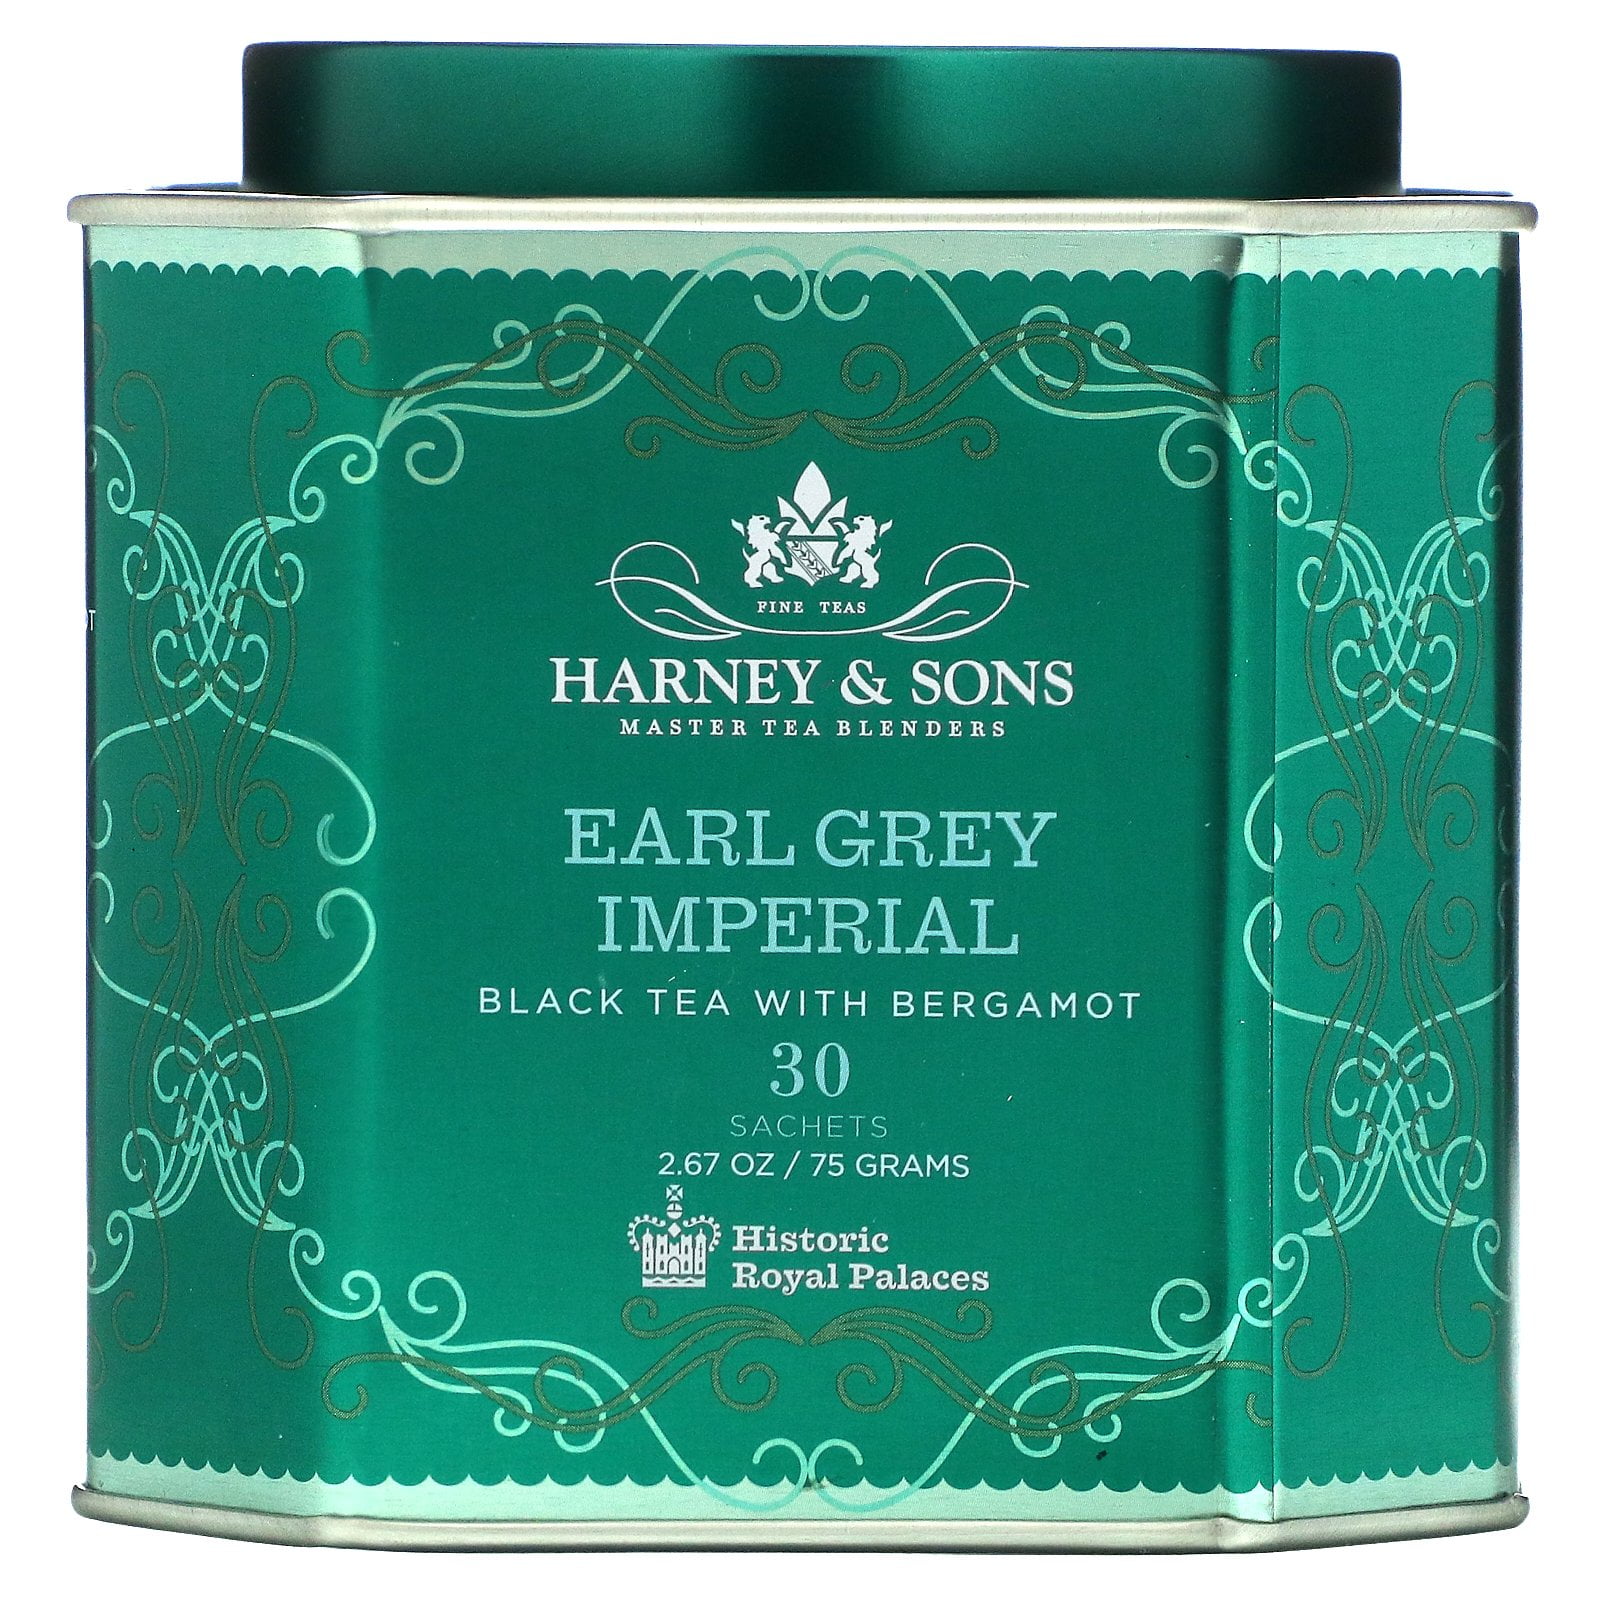 Earl Grey Imperial, Black Tea with Bergamot, 30 Sachets, 2.67 oz (75 g),  Harney & Sons